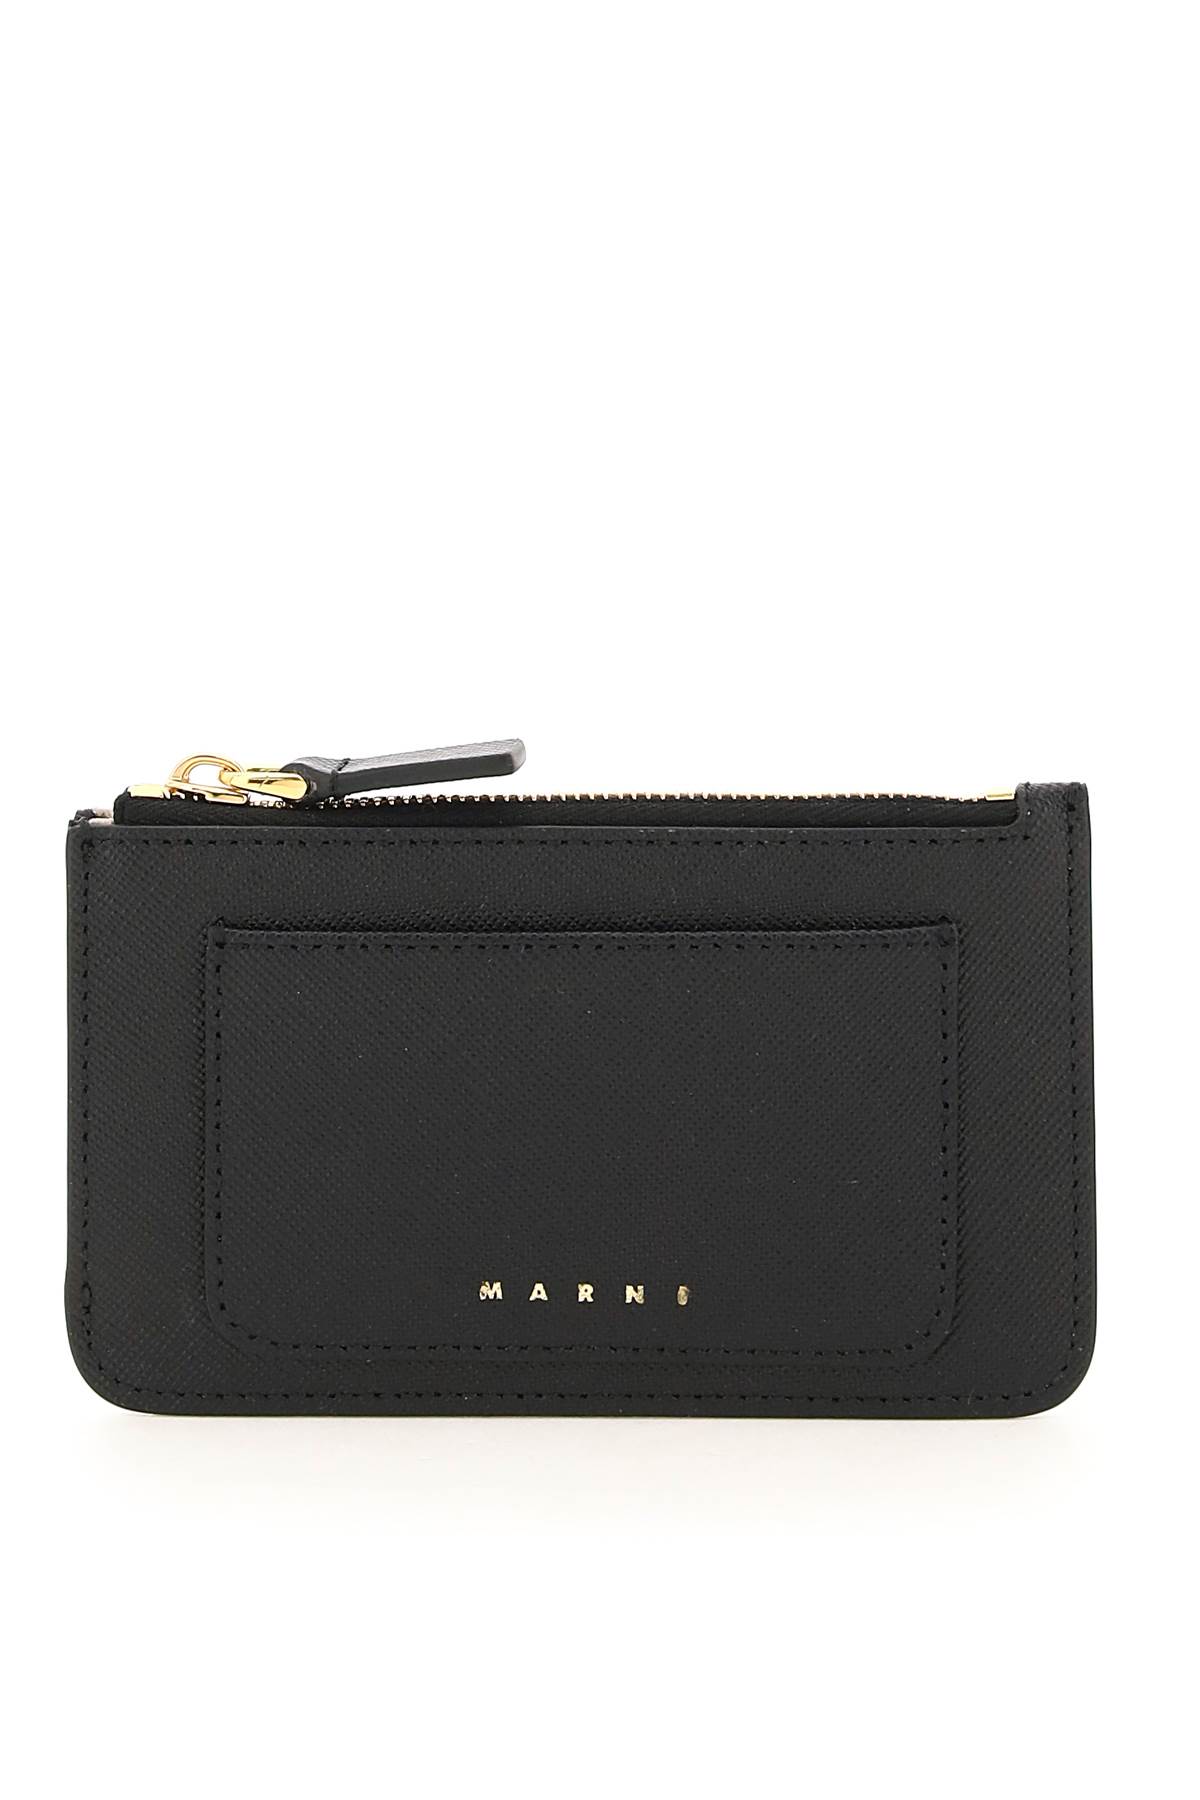 Marni Saffiano Leather Zipped Cardholder